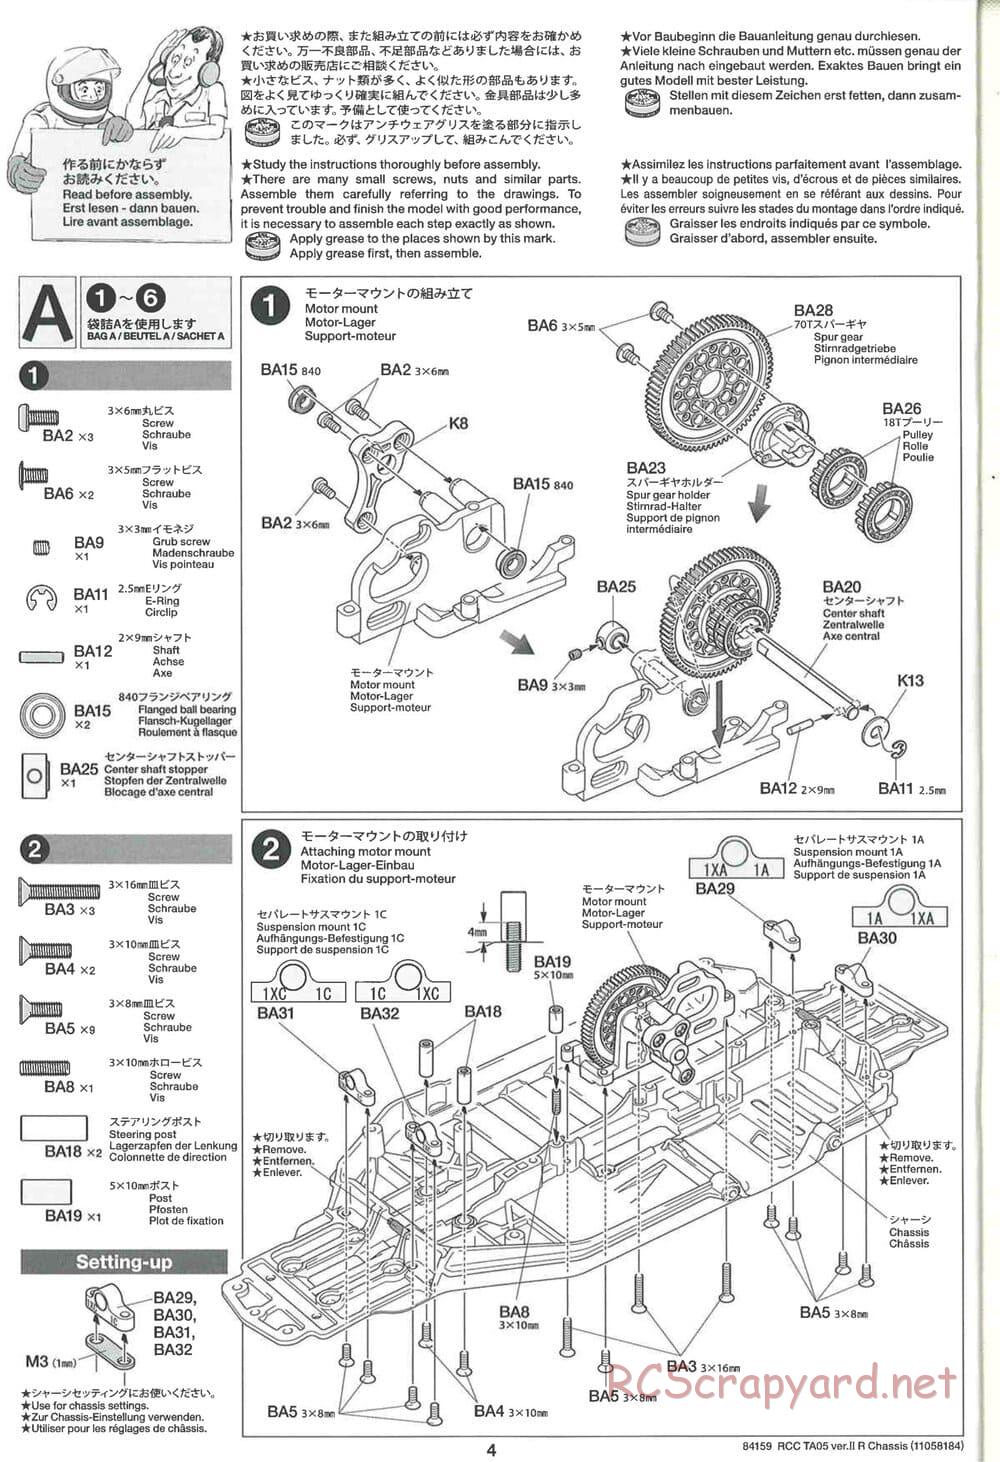 Tamiya - TA05 Ver.II R Chassis - Manual - Page 4